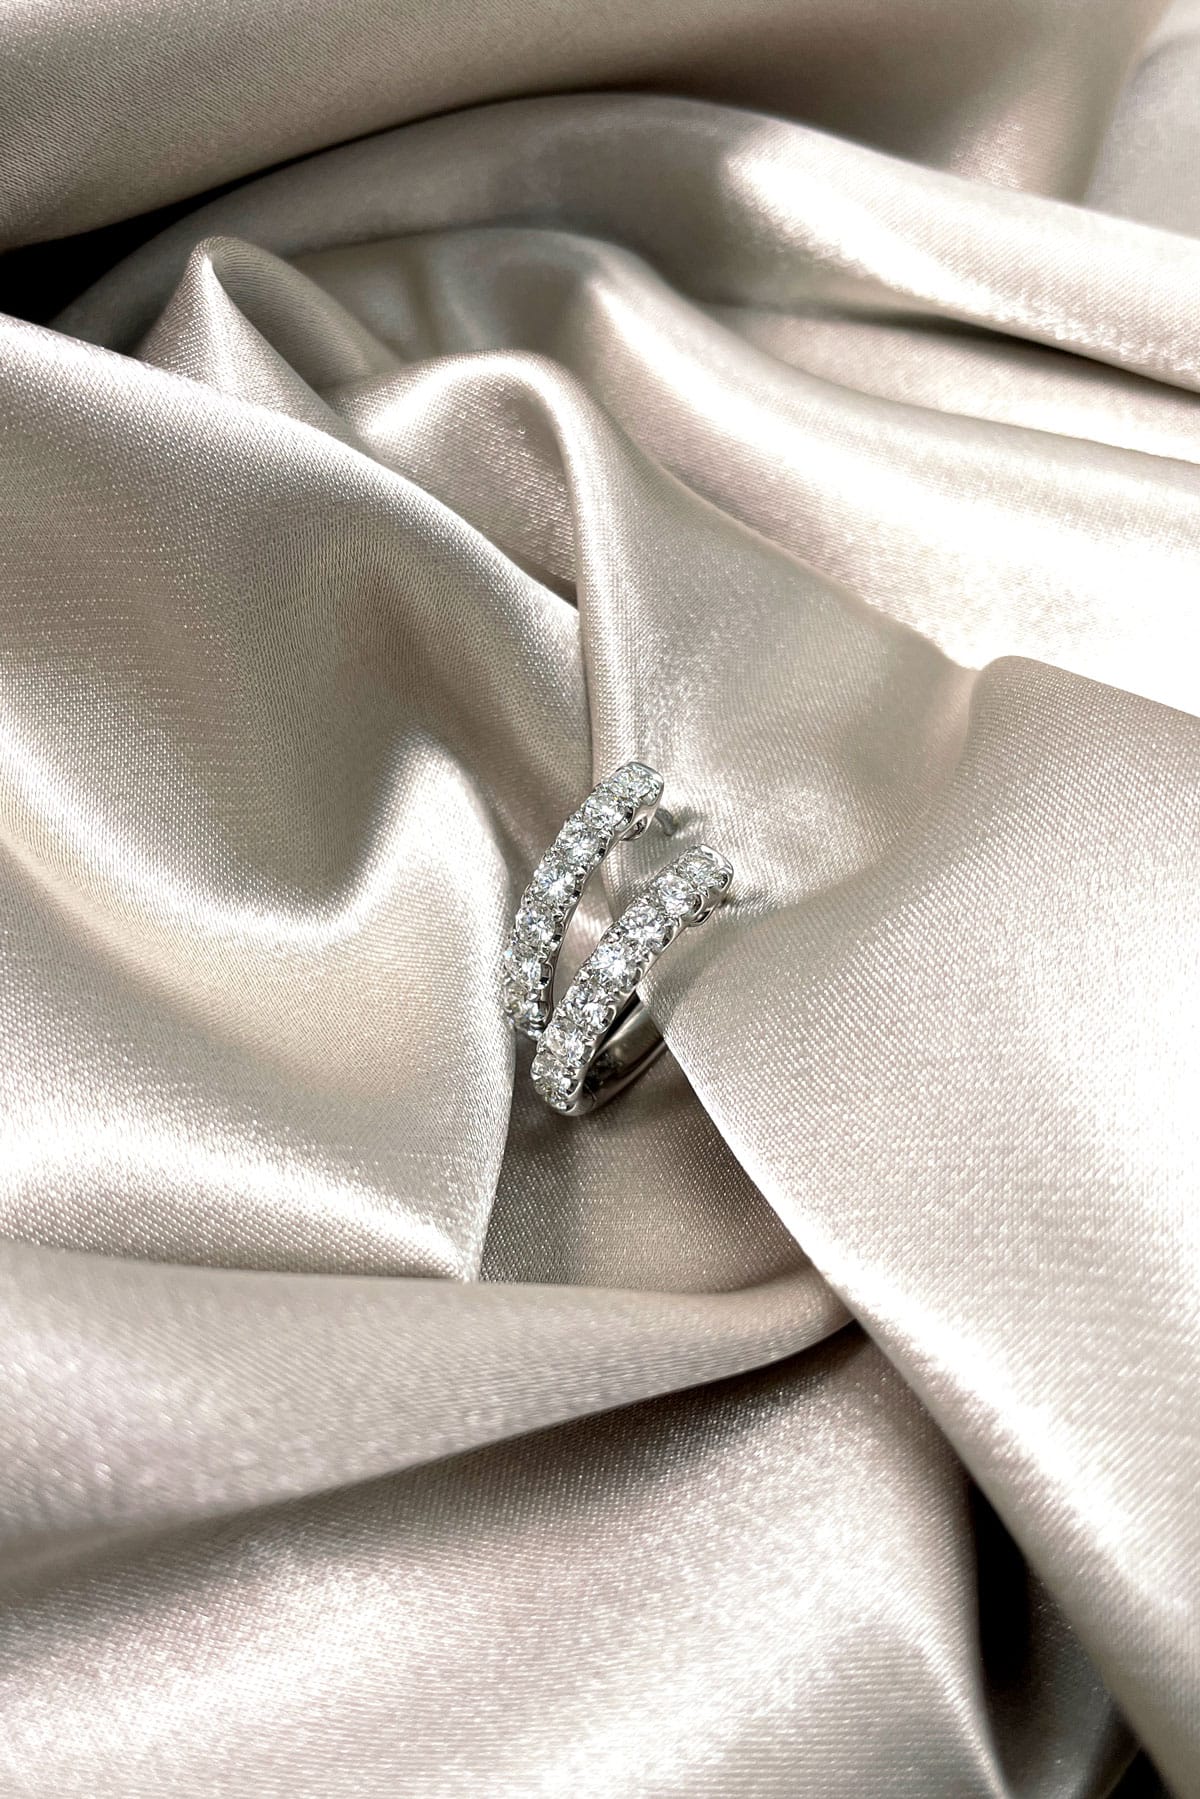 18 Carat White Gold Diamond Set Oval Huggie Earrings available at LeGassick Diamonds and Jewellery Gold Coast, Australia.